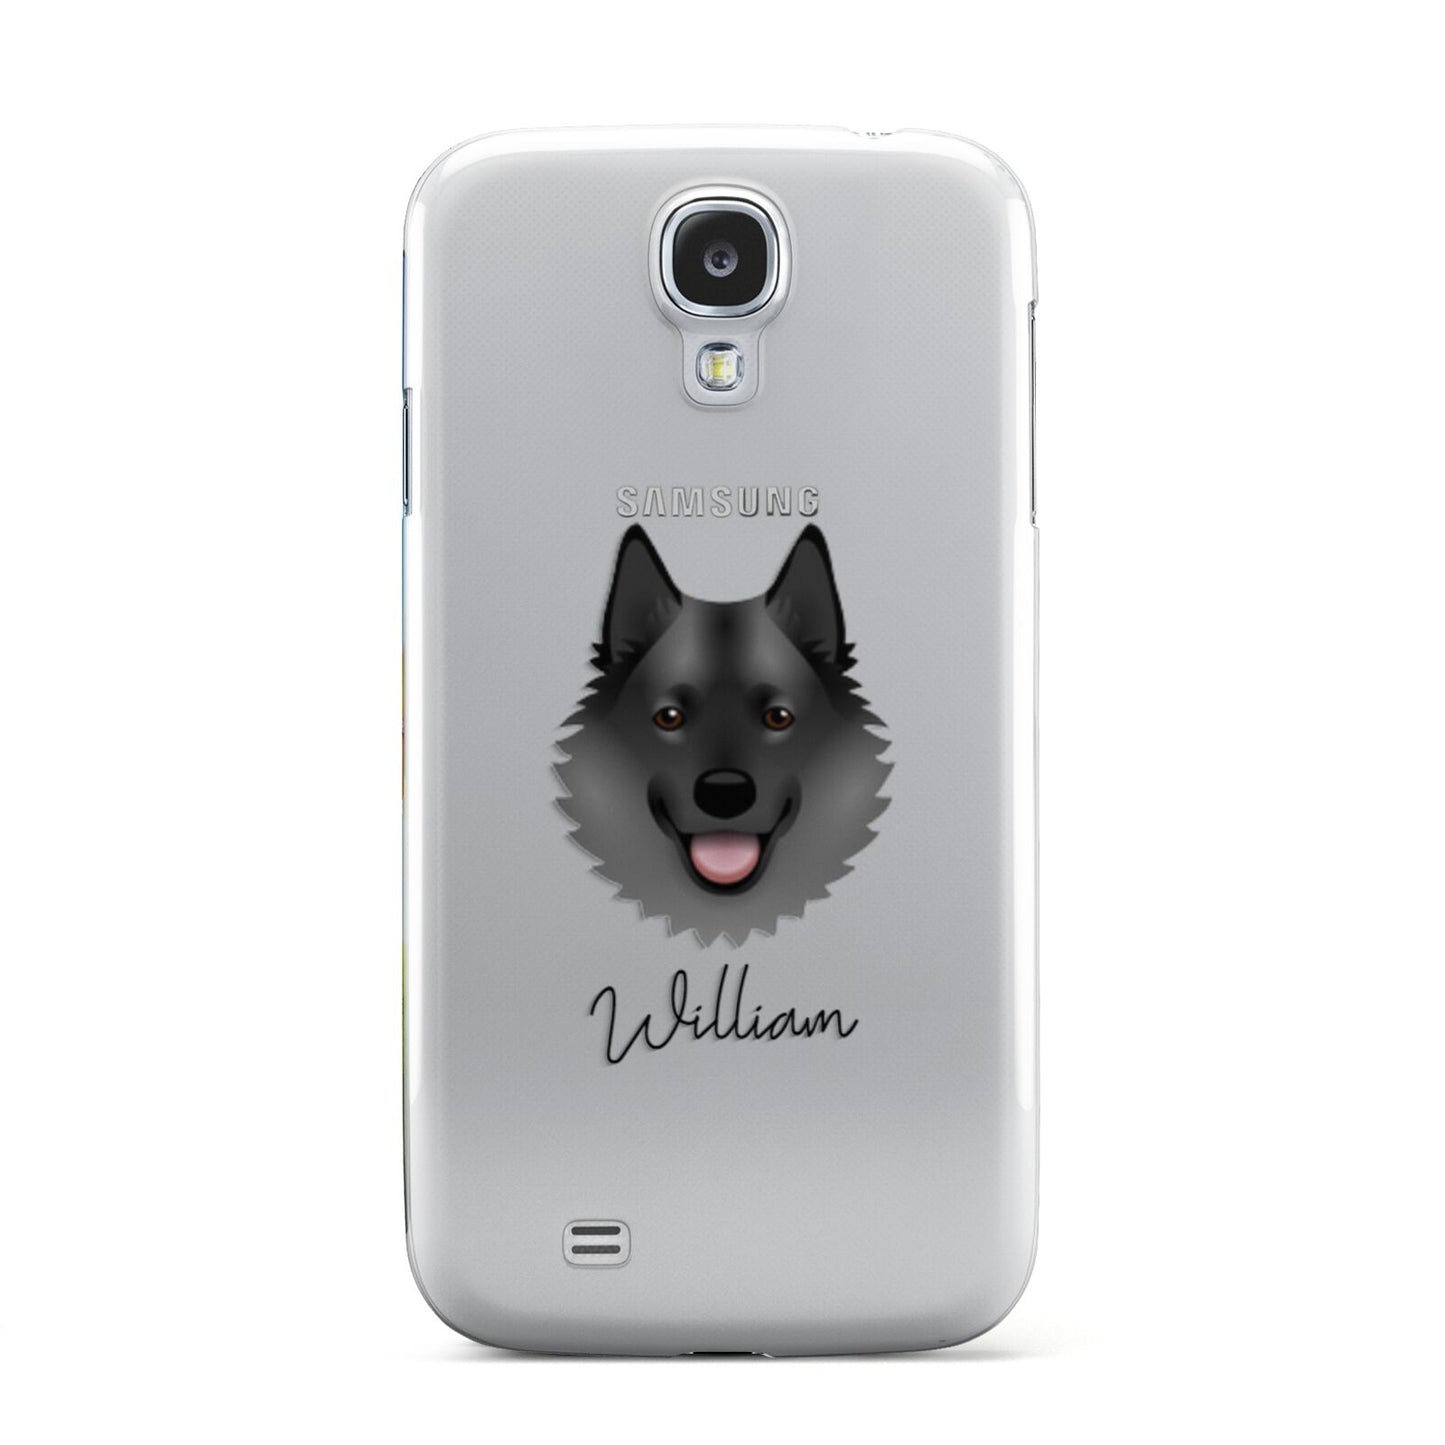 Norwegian Elkhound Personalised Samsung Galaxy S4 Case